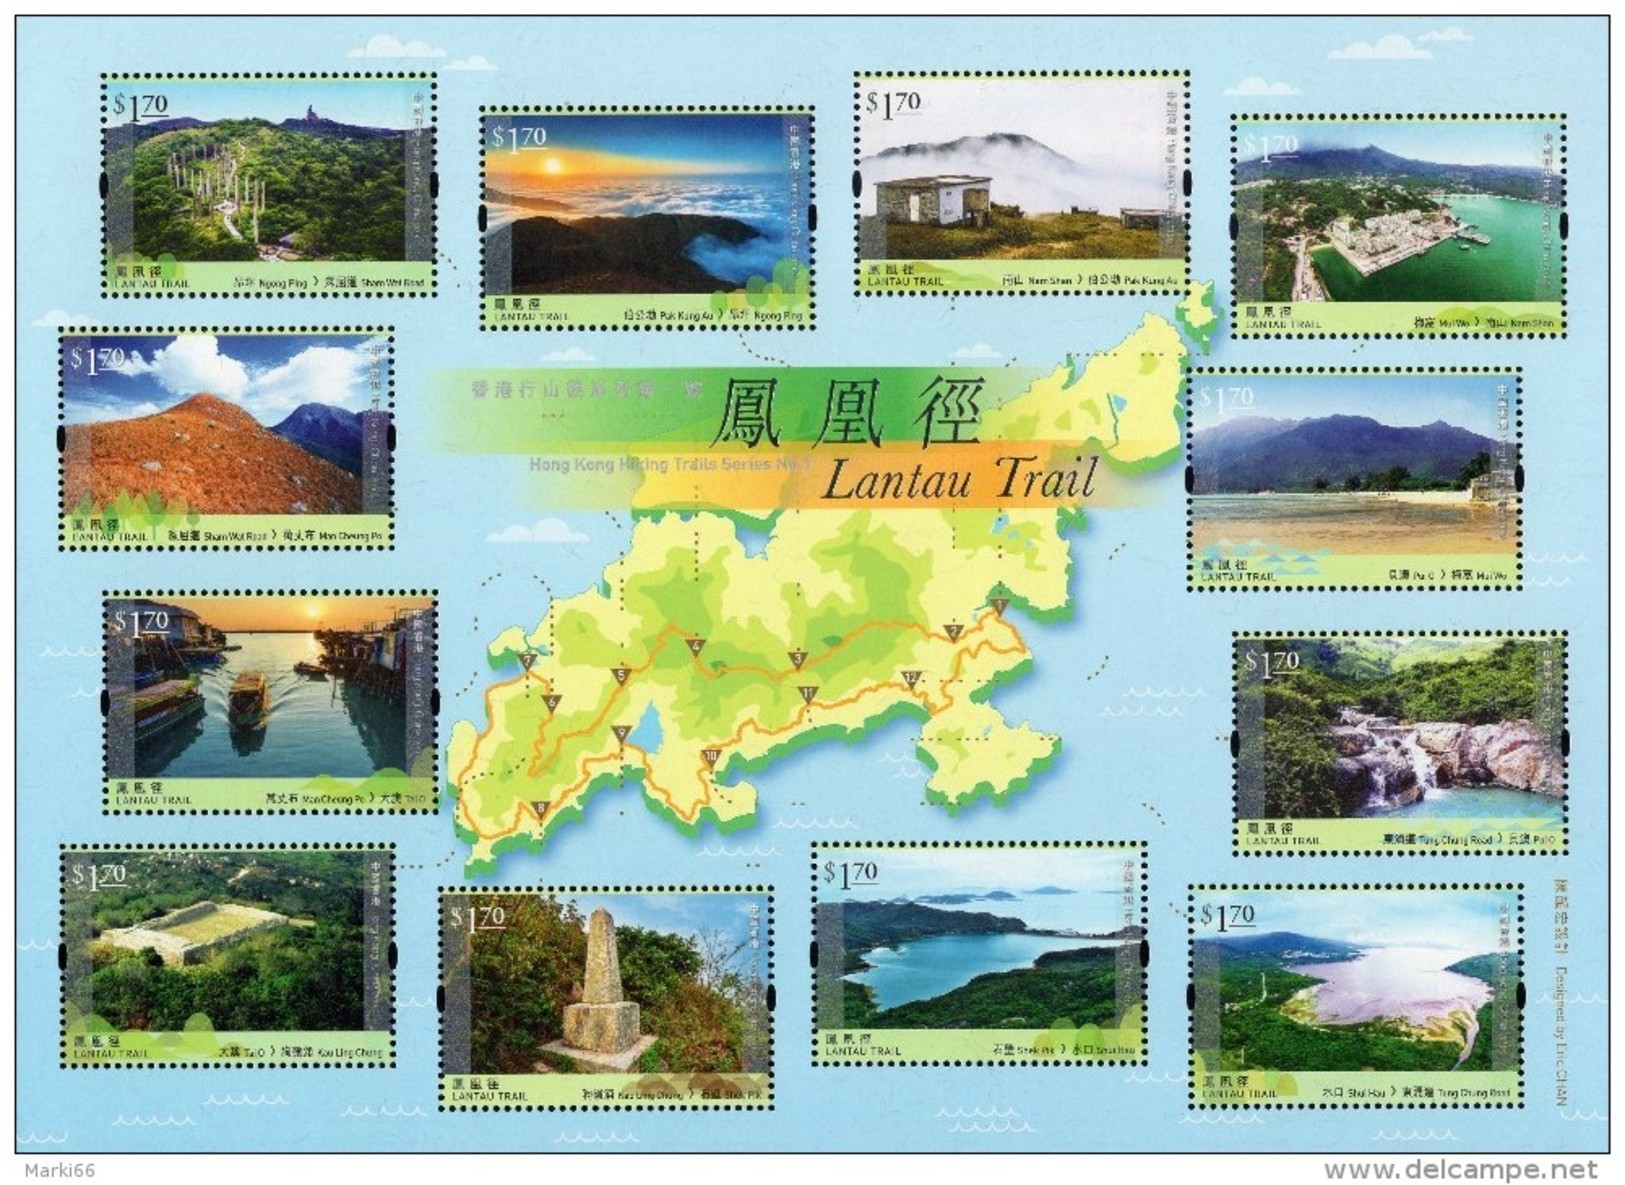 Hong Kong - 2016 - Hong Kong Hiking Trails, Series 1 - Lantau Trail - Mint Souvenir Sheet - Ungebraucht